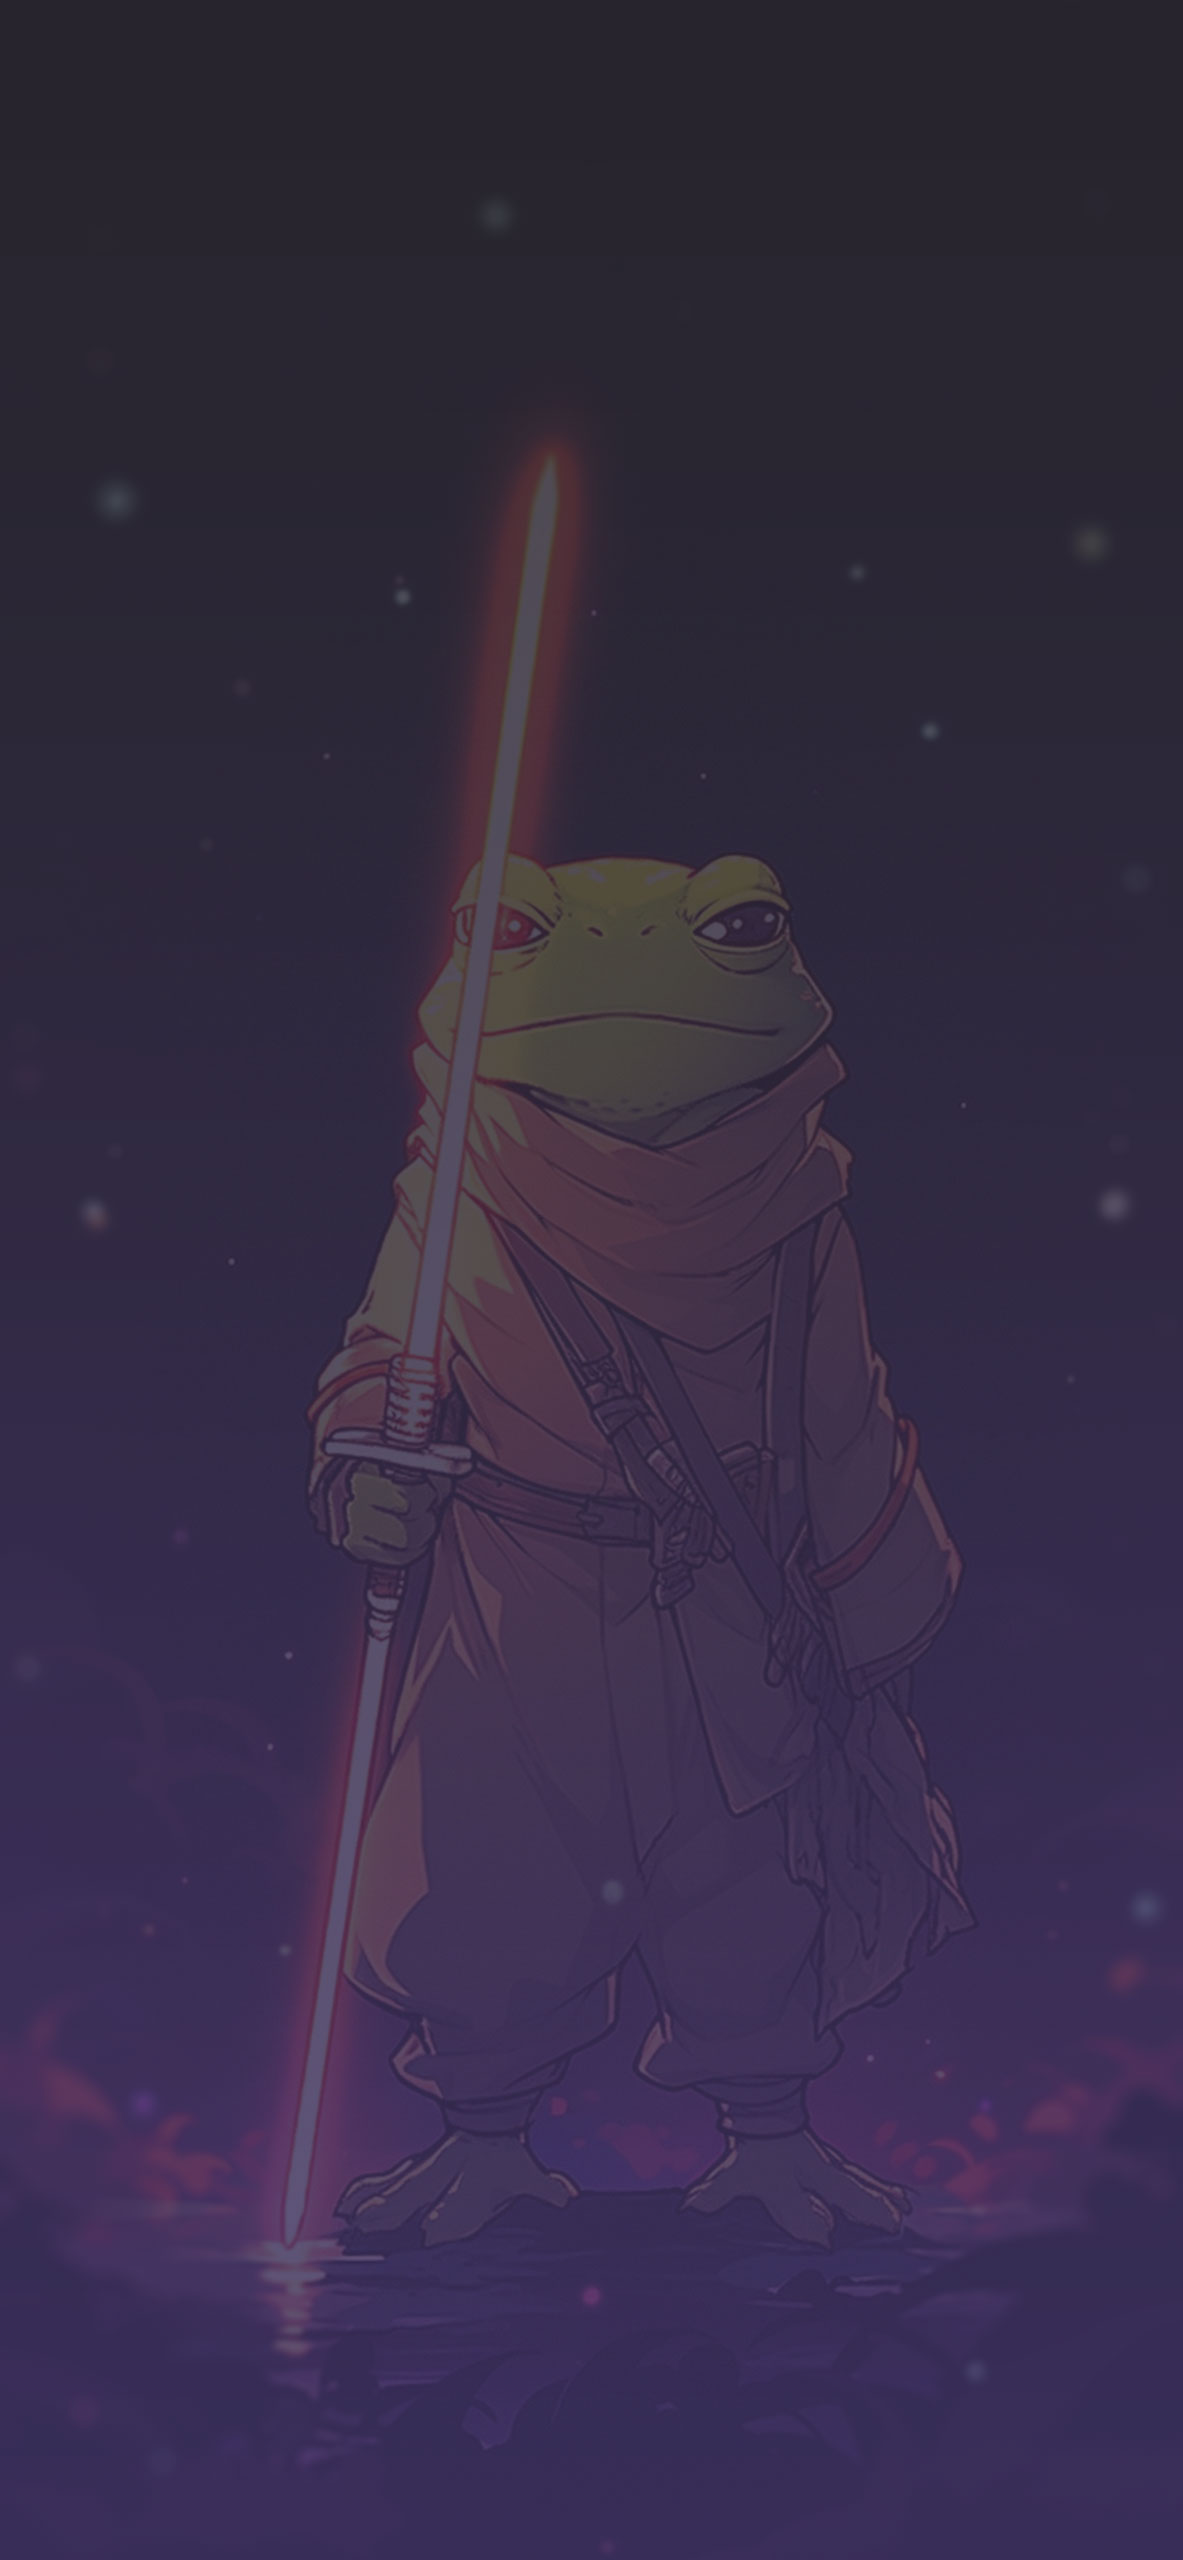 Frog with laser saber art wallpaper Star wars style art wallpa